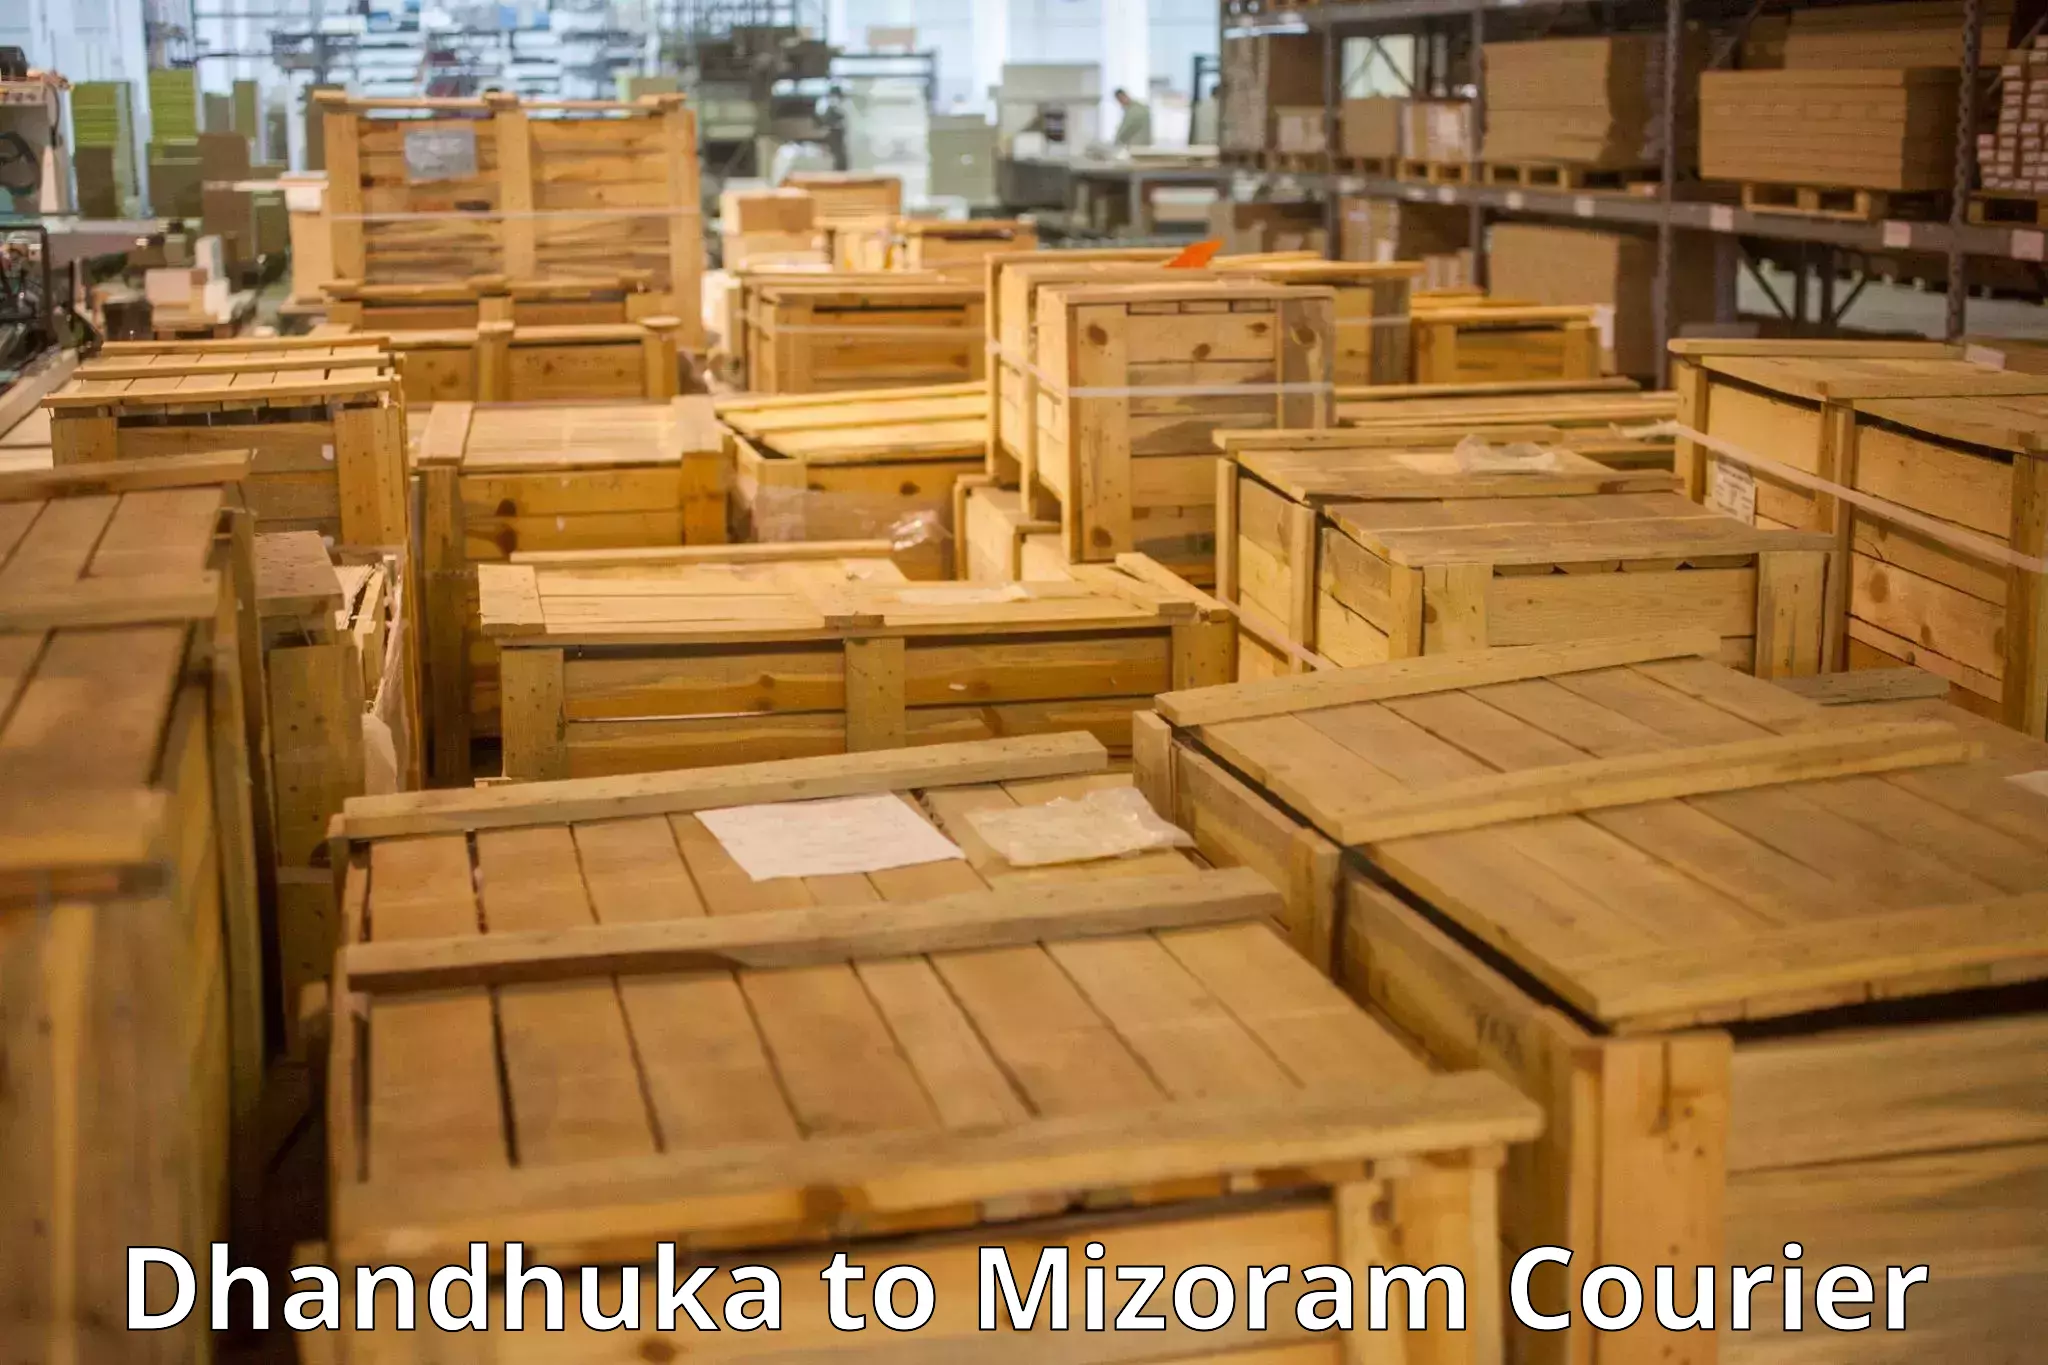 Baggage relocation service Dhandhuka to Mizoram